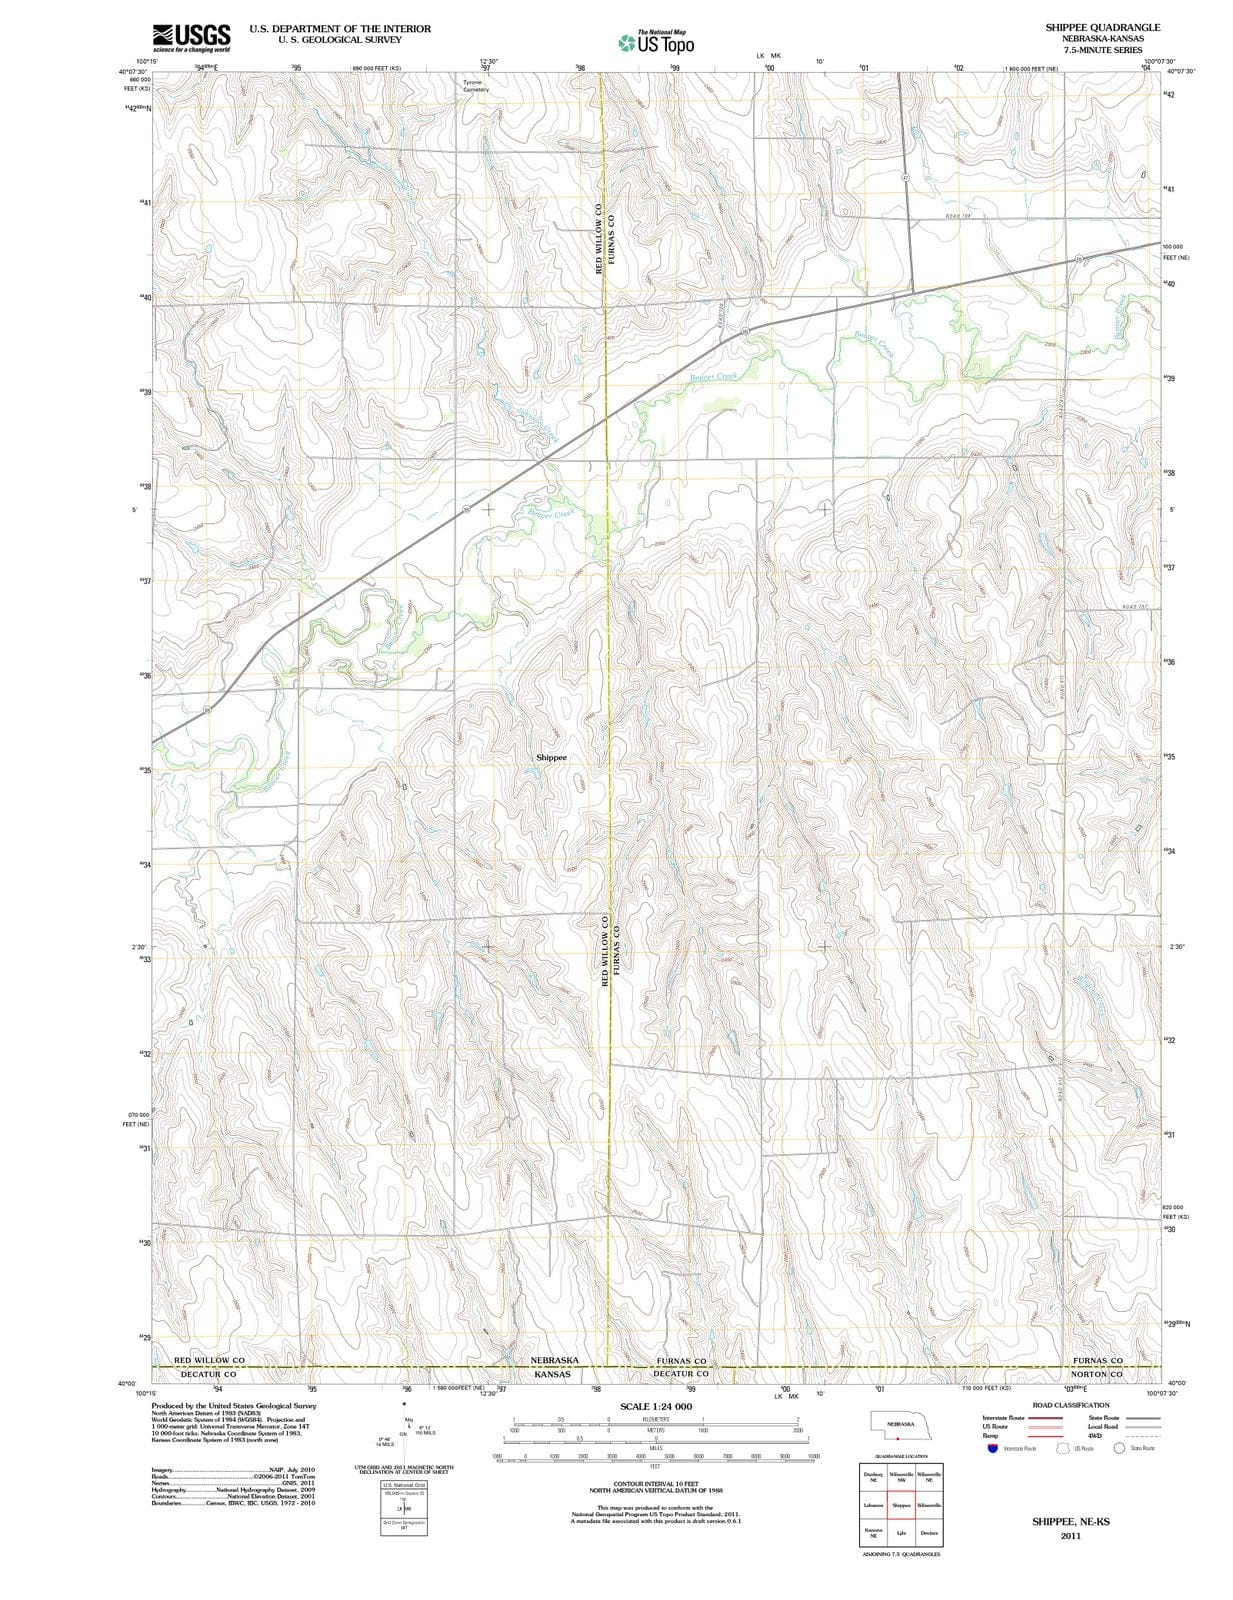 2011 Shippee, NE - Nebraska - USGS Topographic Map